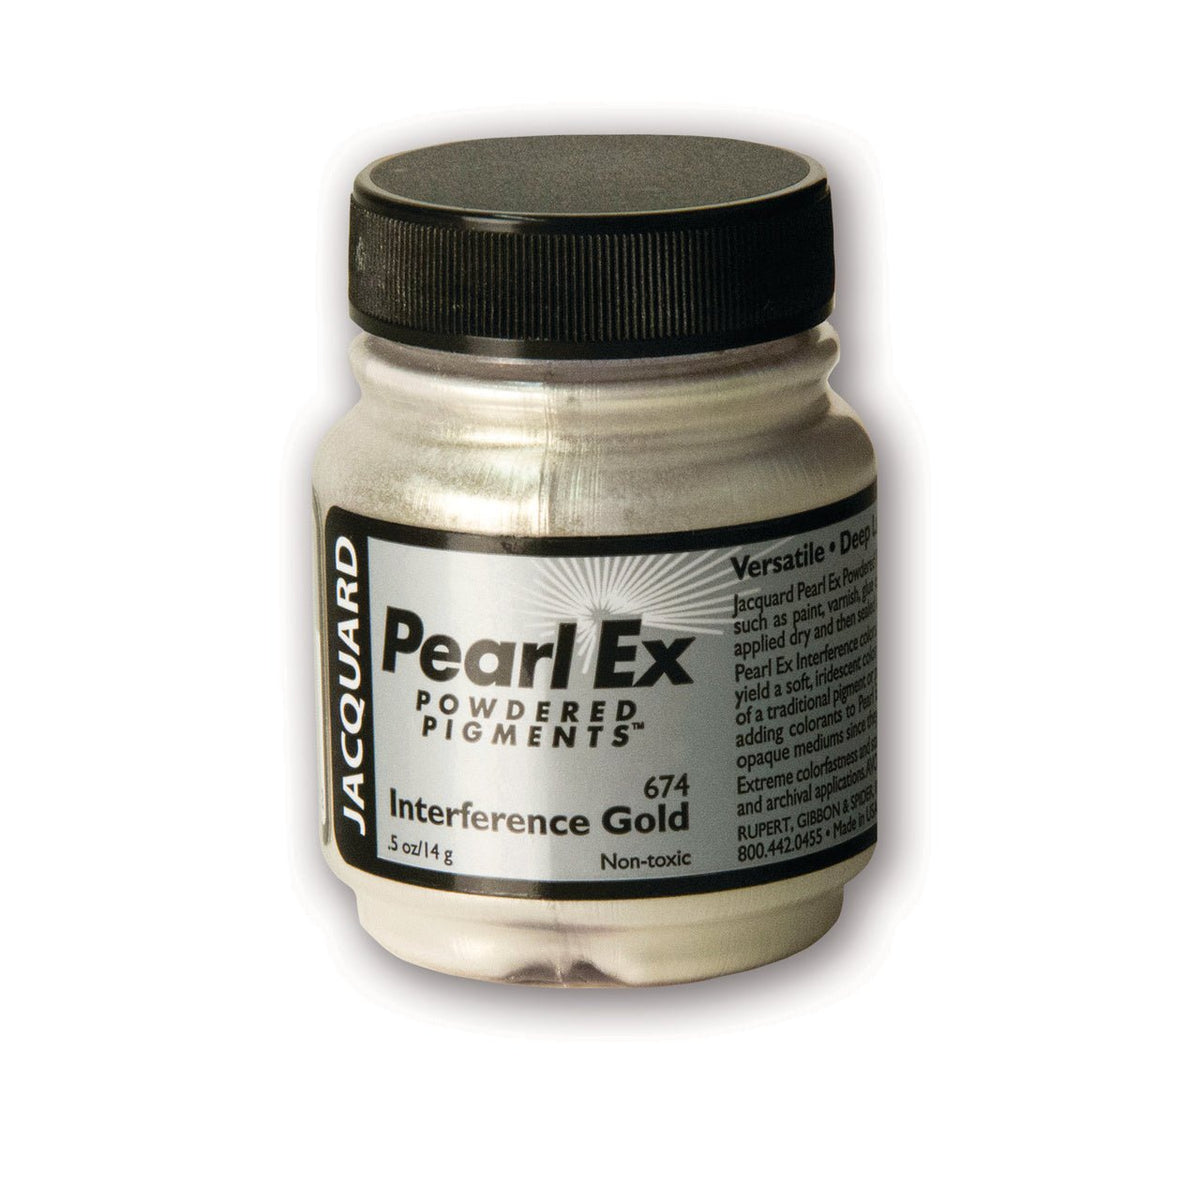 JACQUARD Pearl Ex Powdered Pigments